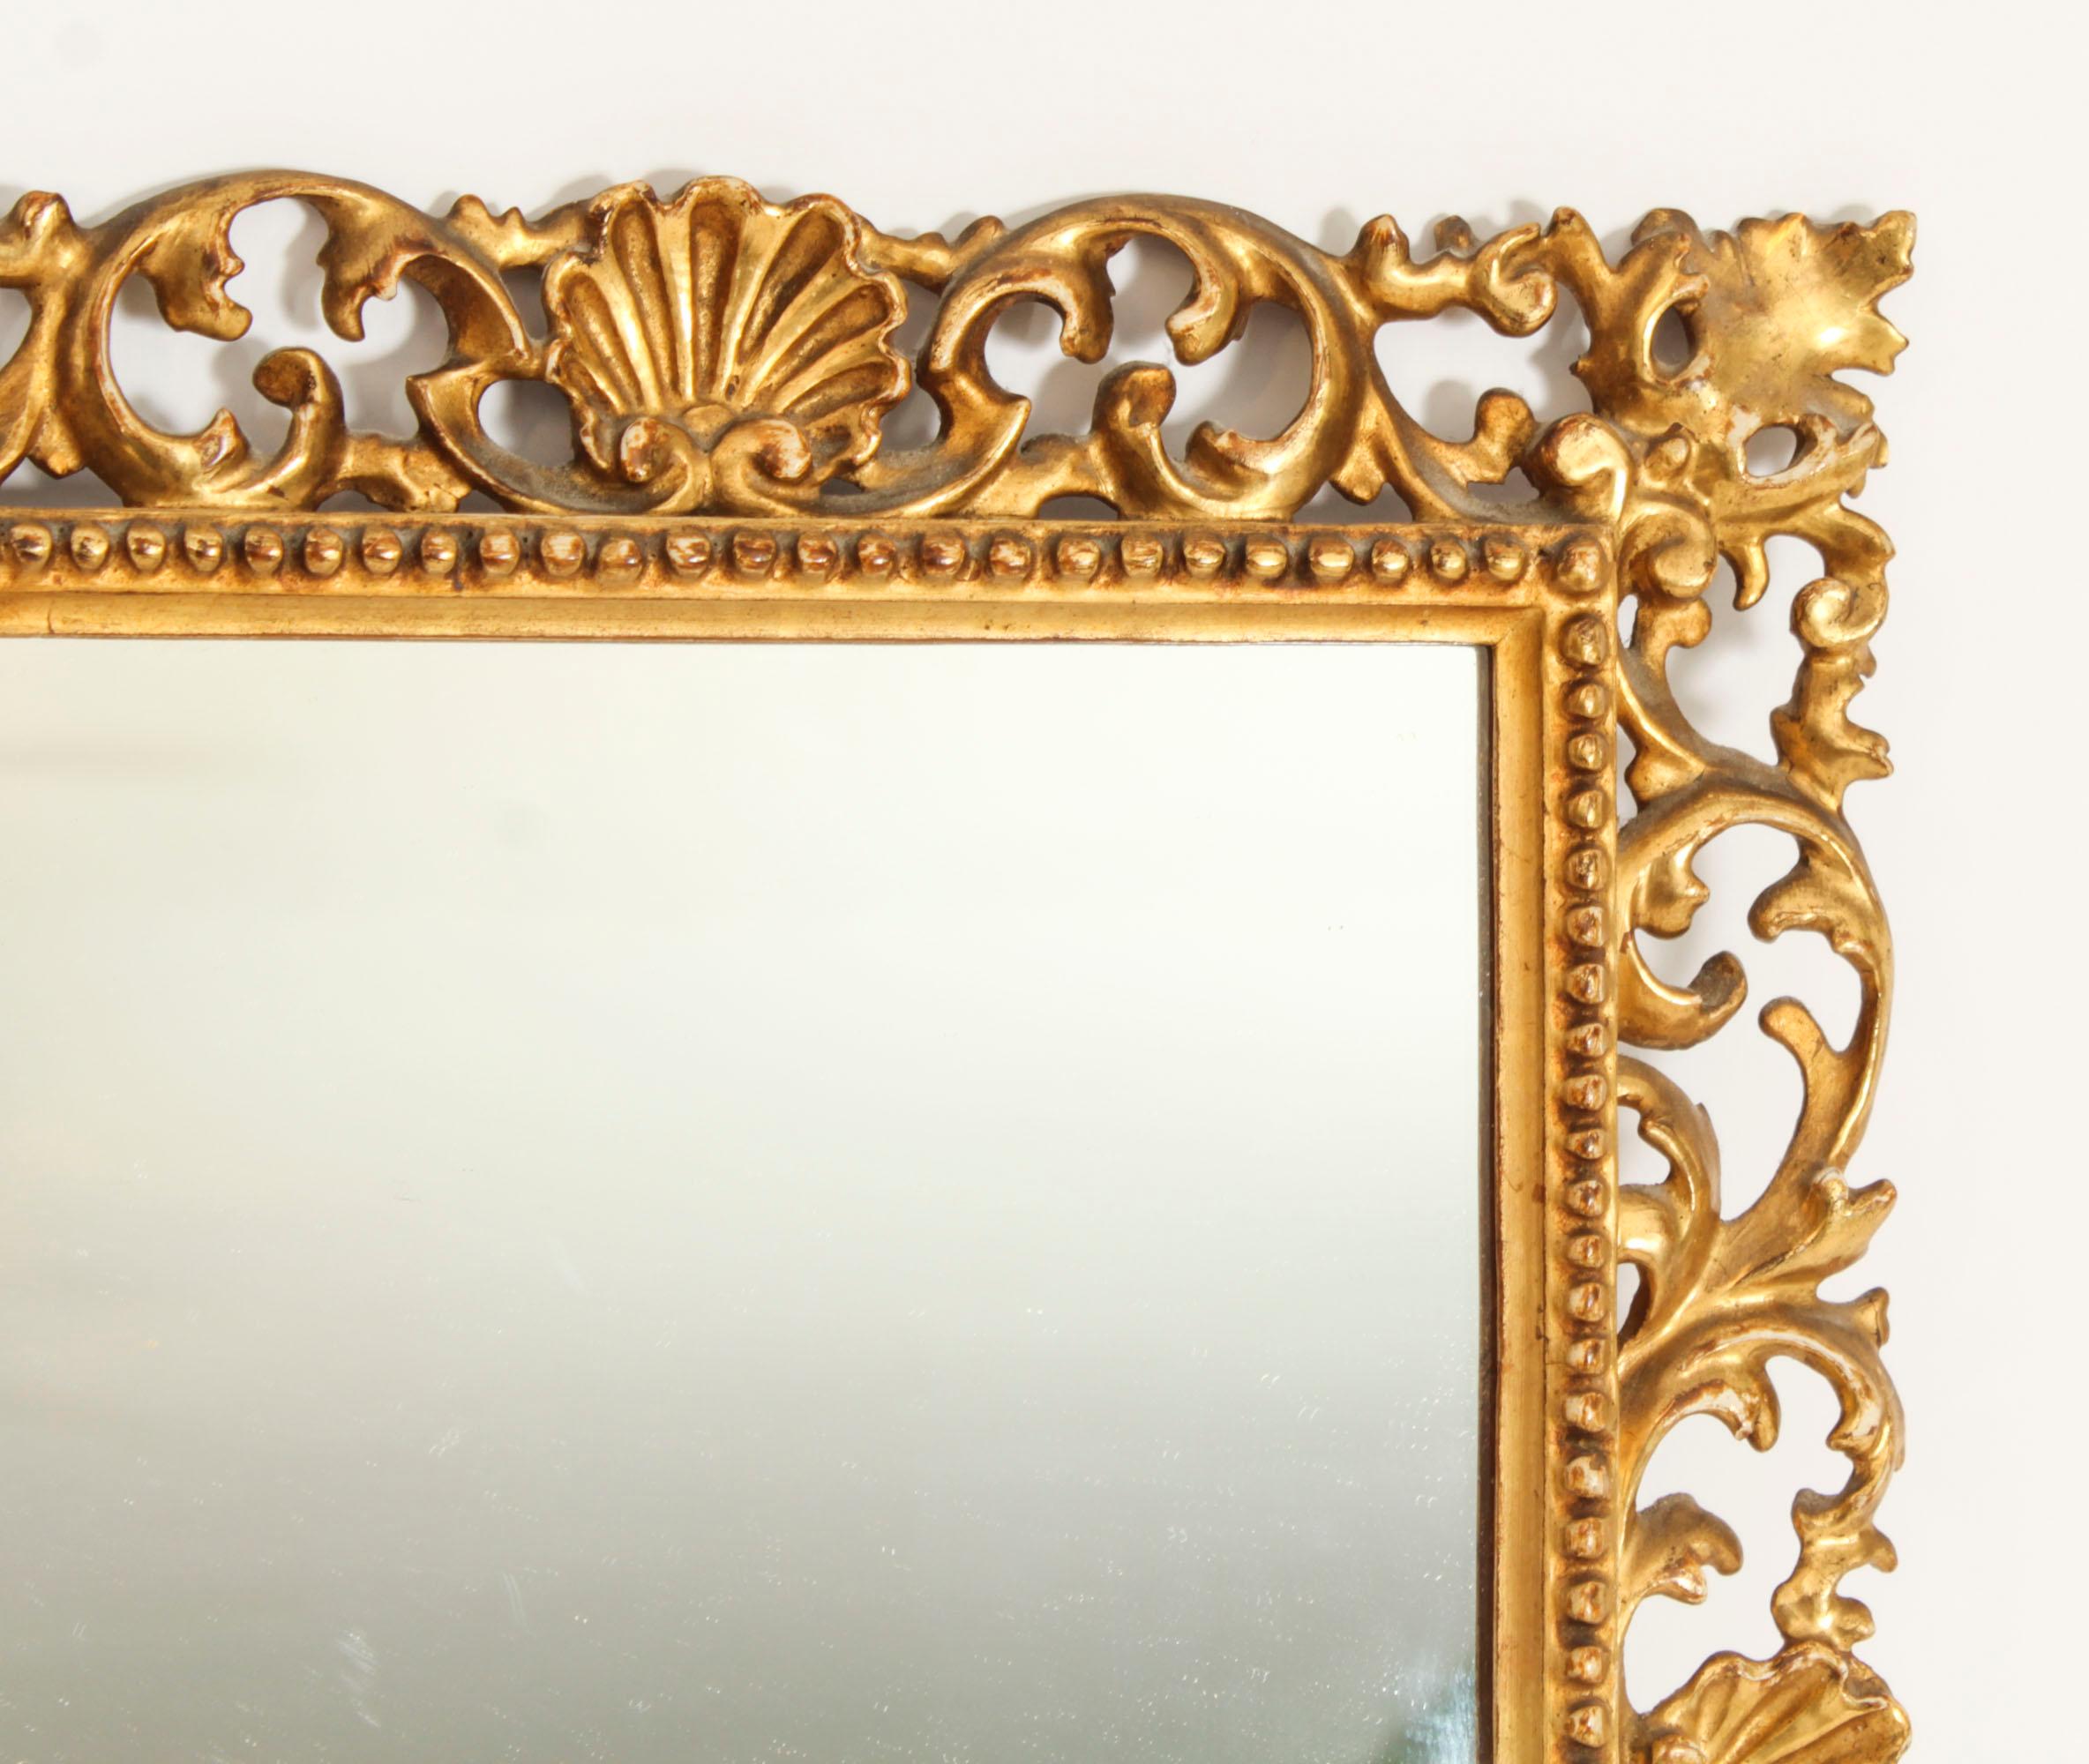 Antique Italian Giltwood Florentine Mirror 19th Century 40 x 30cm For Sale 4